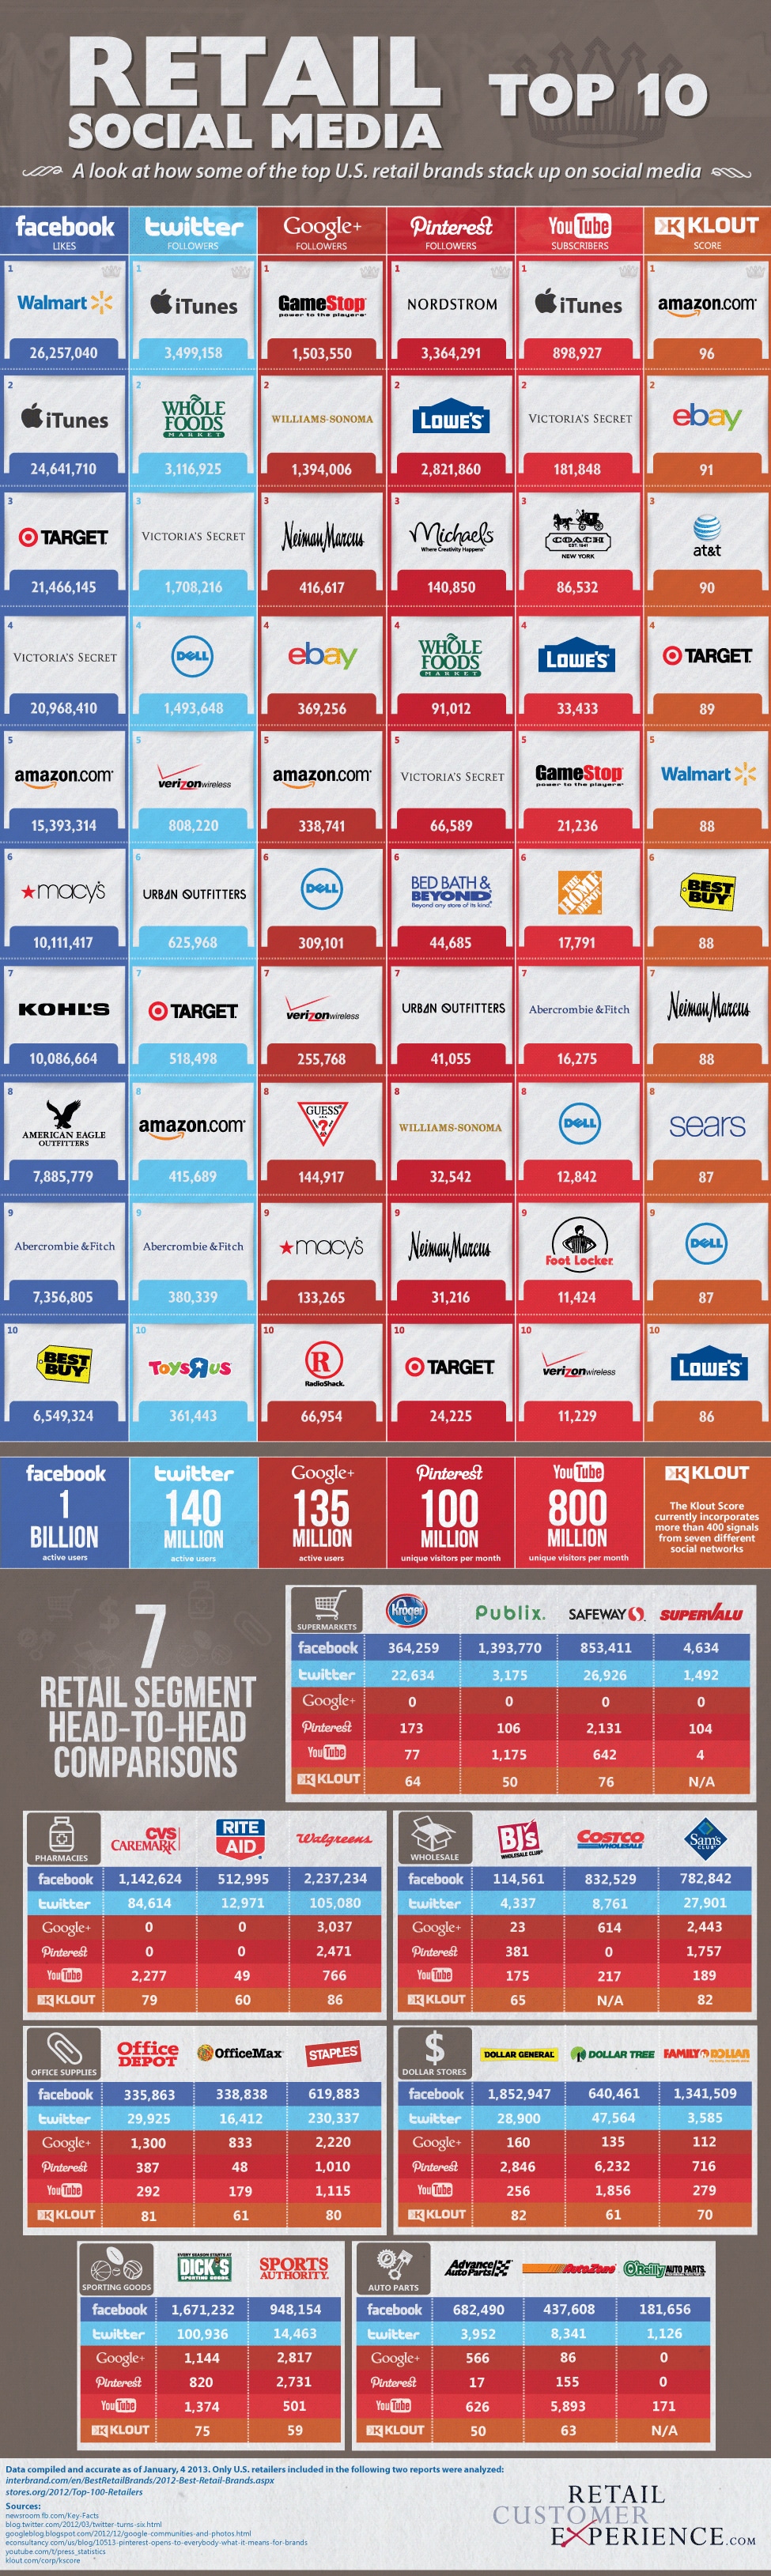 top-10-retailers-infographic